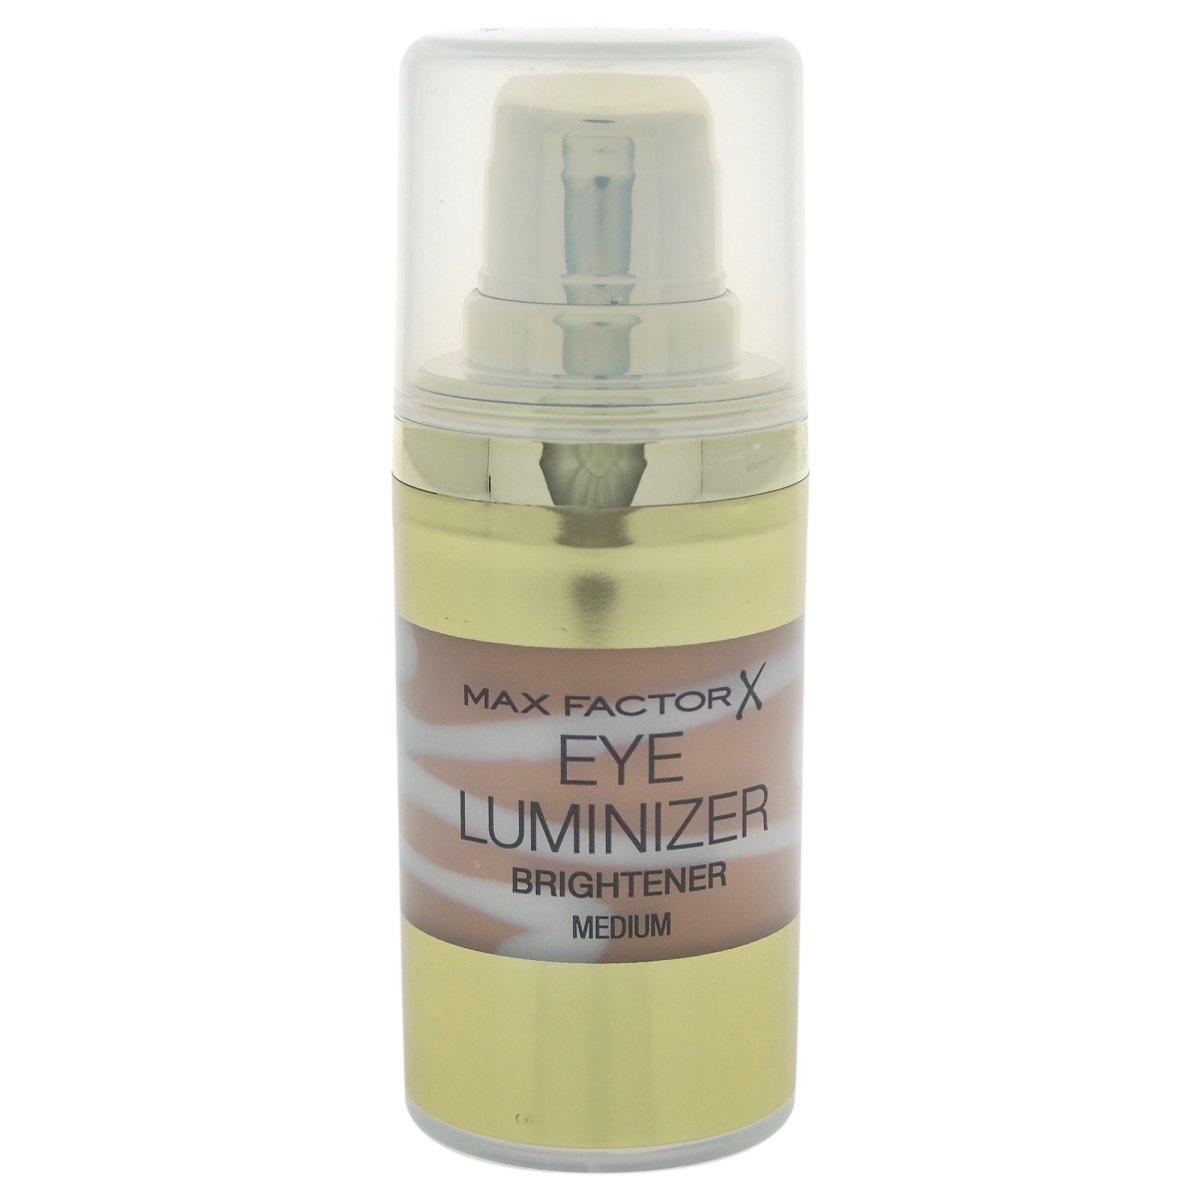 W-c-11262 15 Ml Eye Luminizer Brightener - Medium For Women